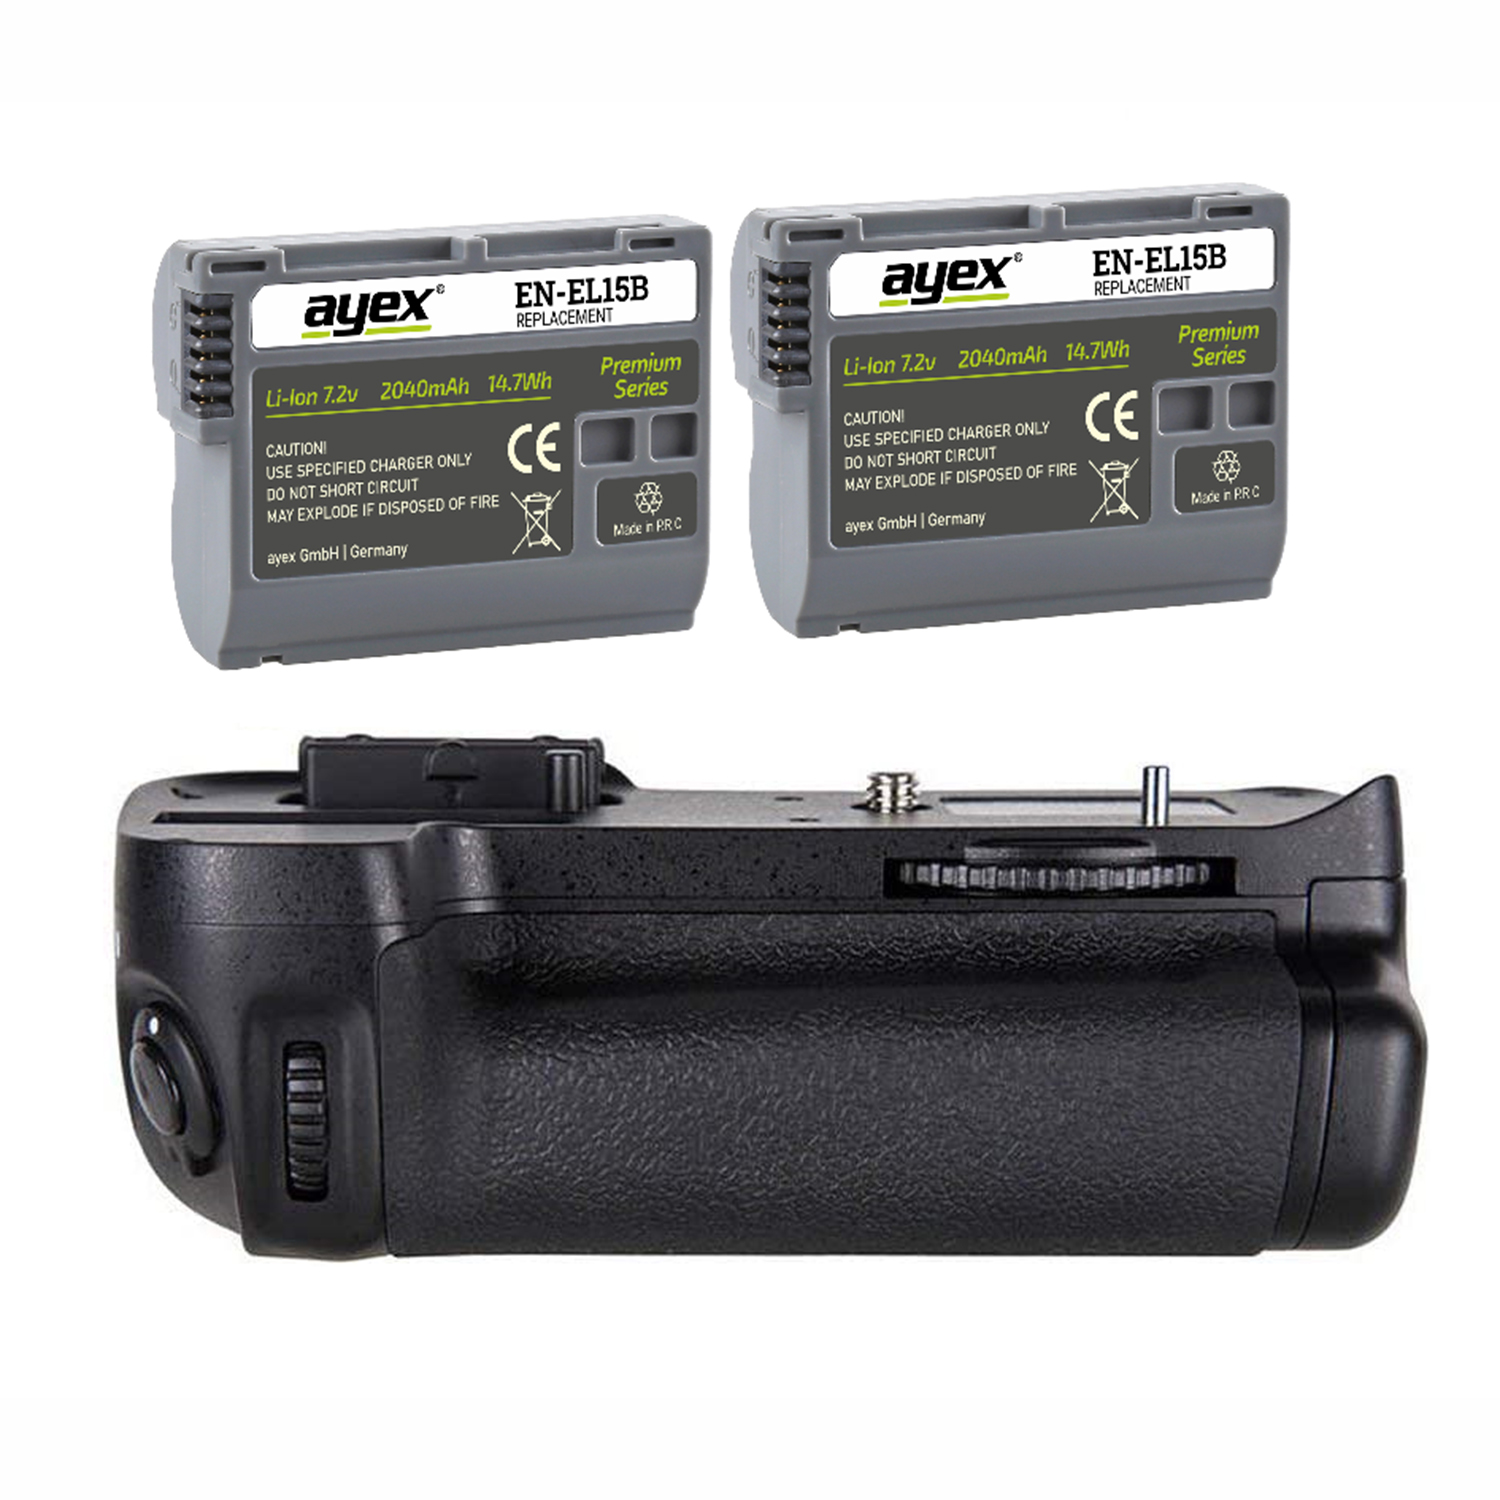 EN-EL15B Akkus 2x wie Nikon Set, Batteriegriff Set + AYEX für D7000 MB-D11, Schwarz Batteriegriff